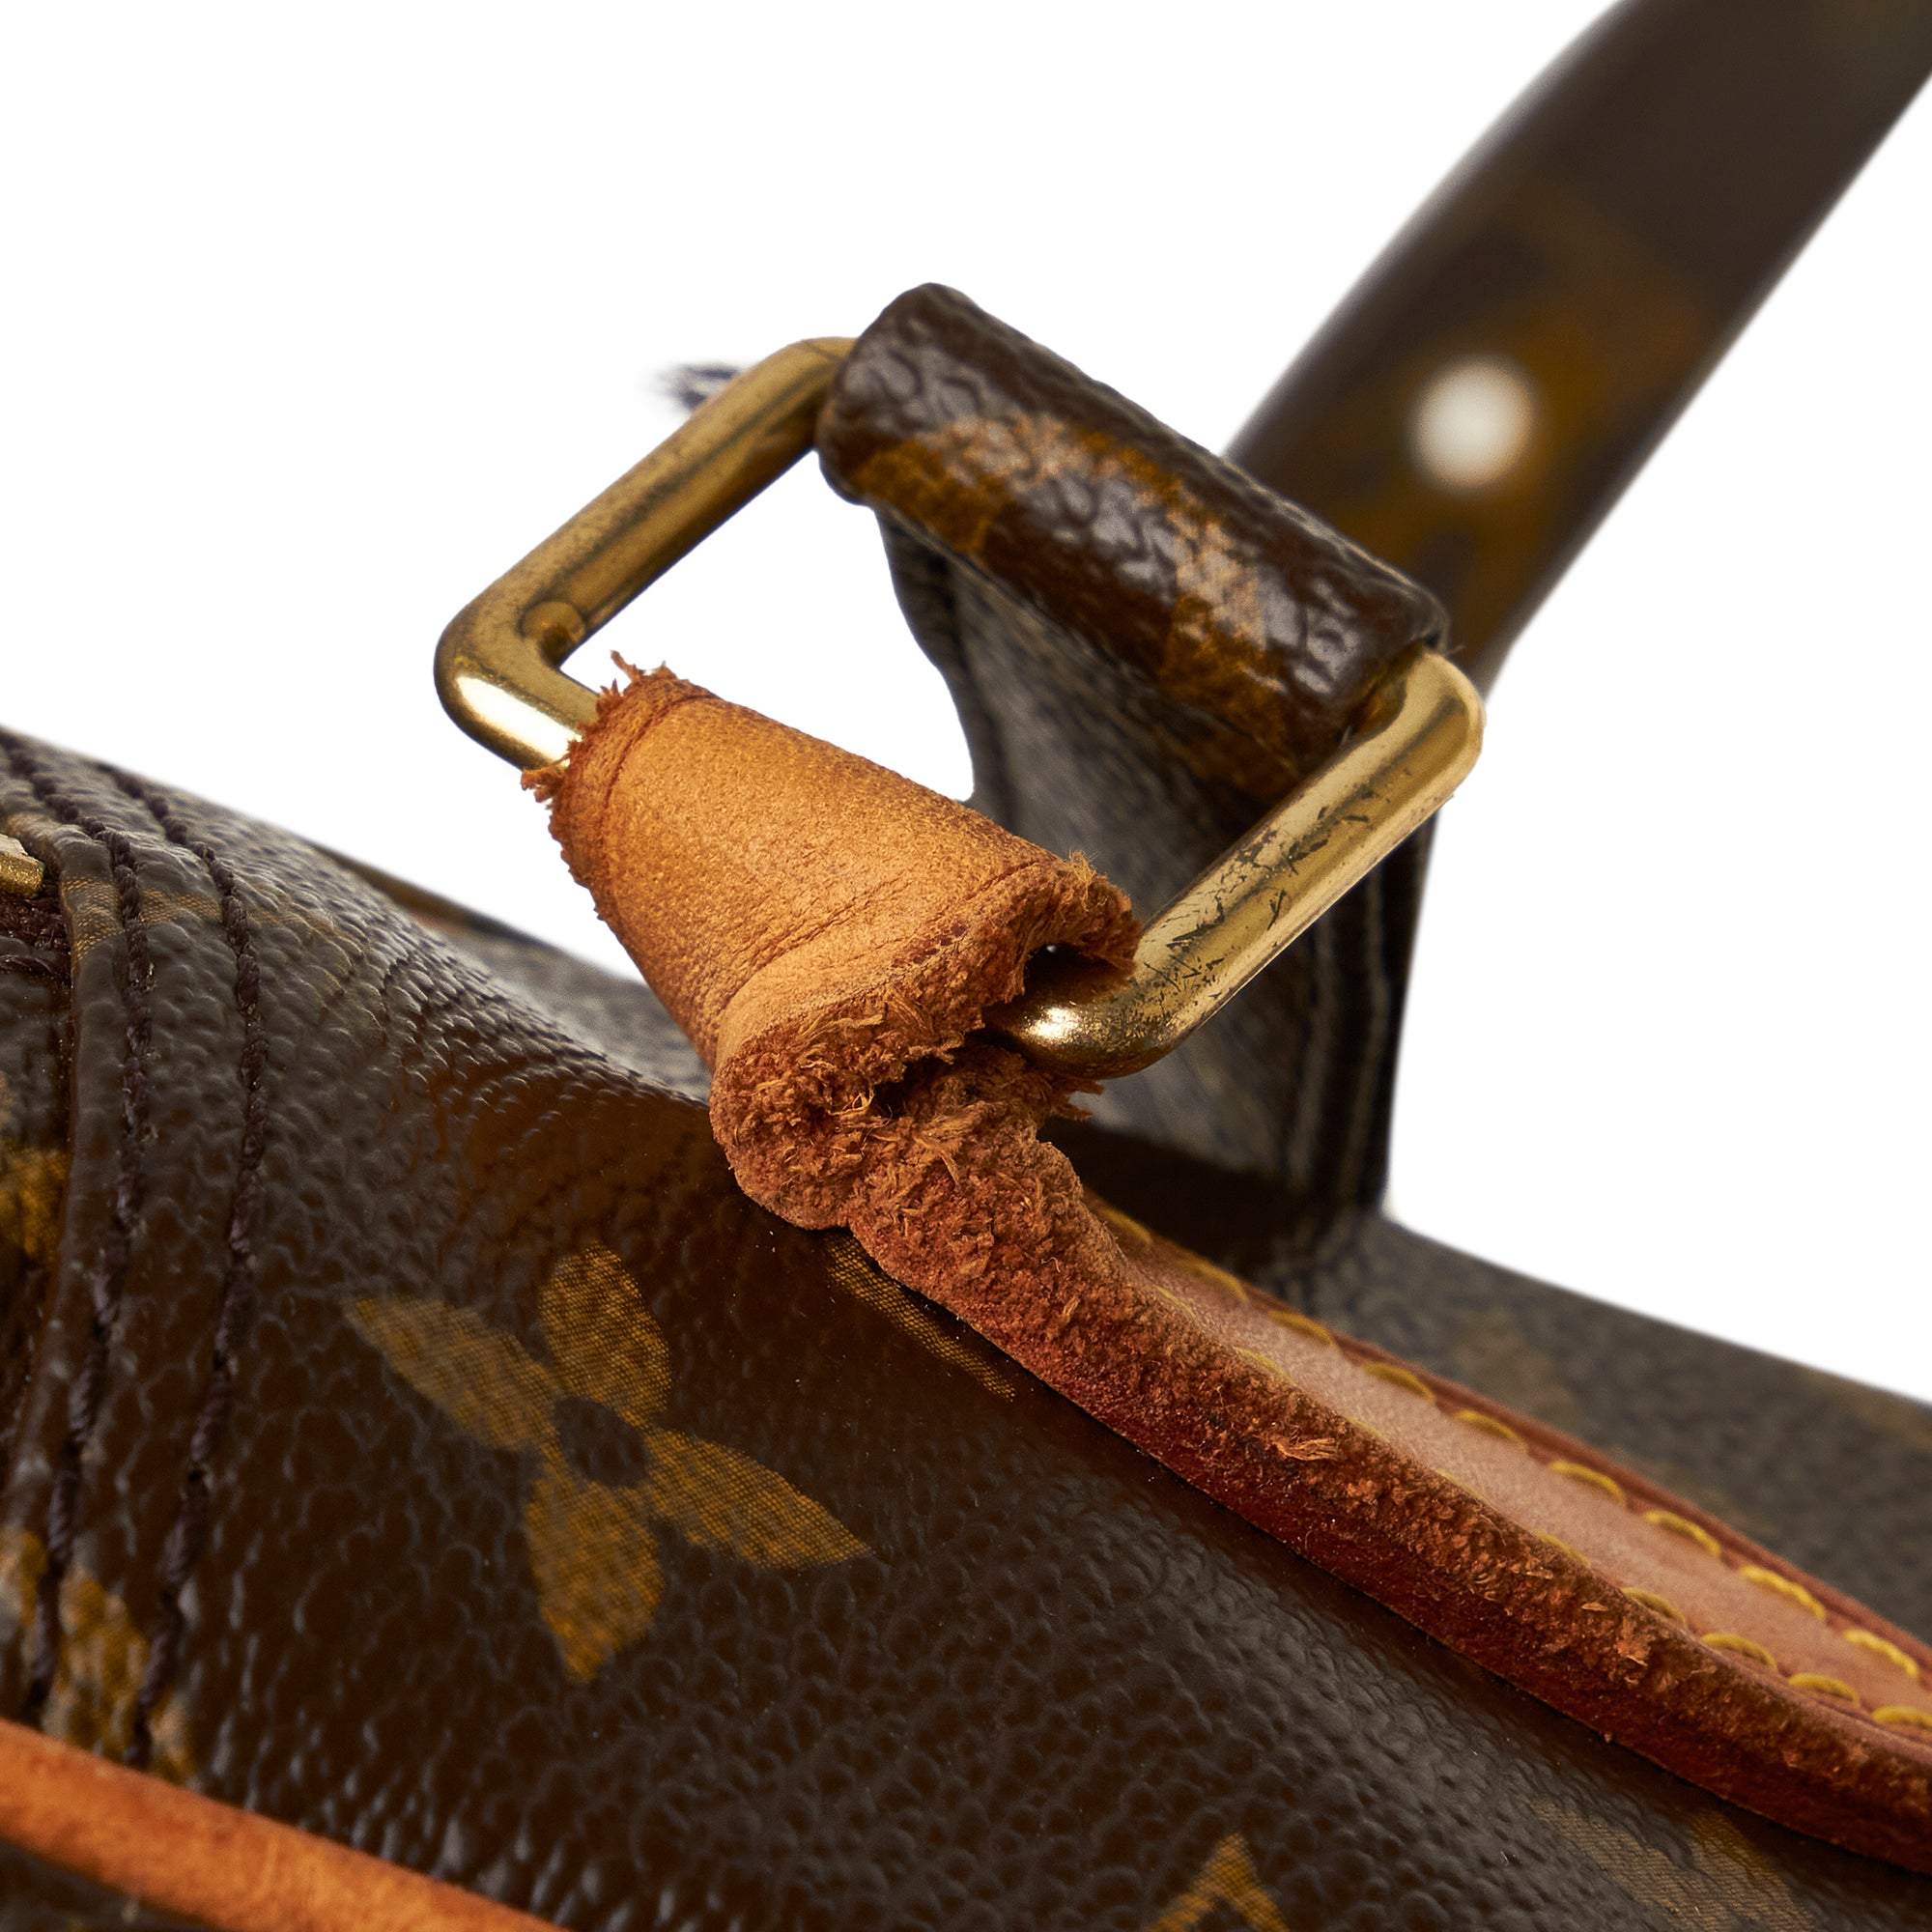 Louis Vuitton - Authenticated Nile Handbag - Cloth Brown for Women, Good Condition